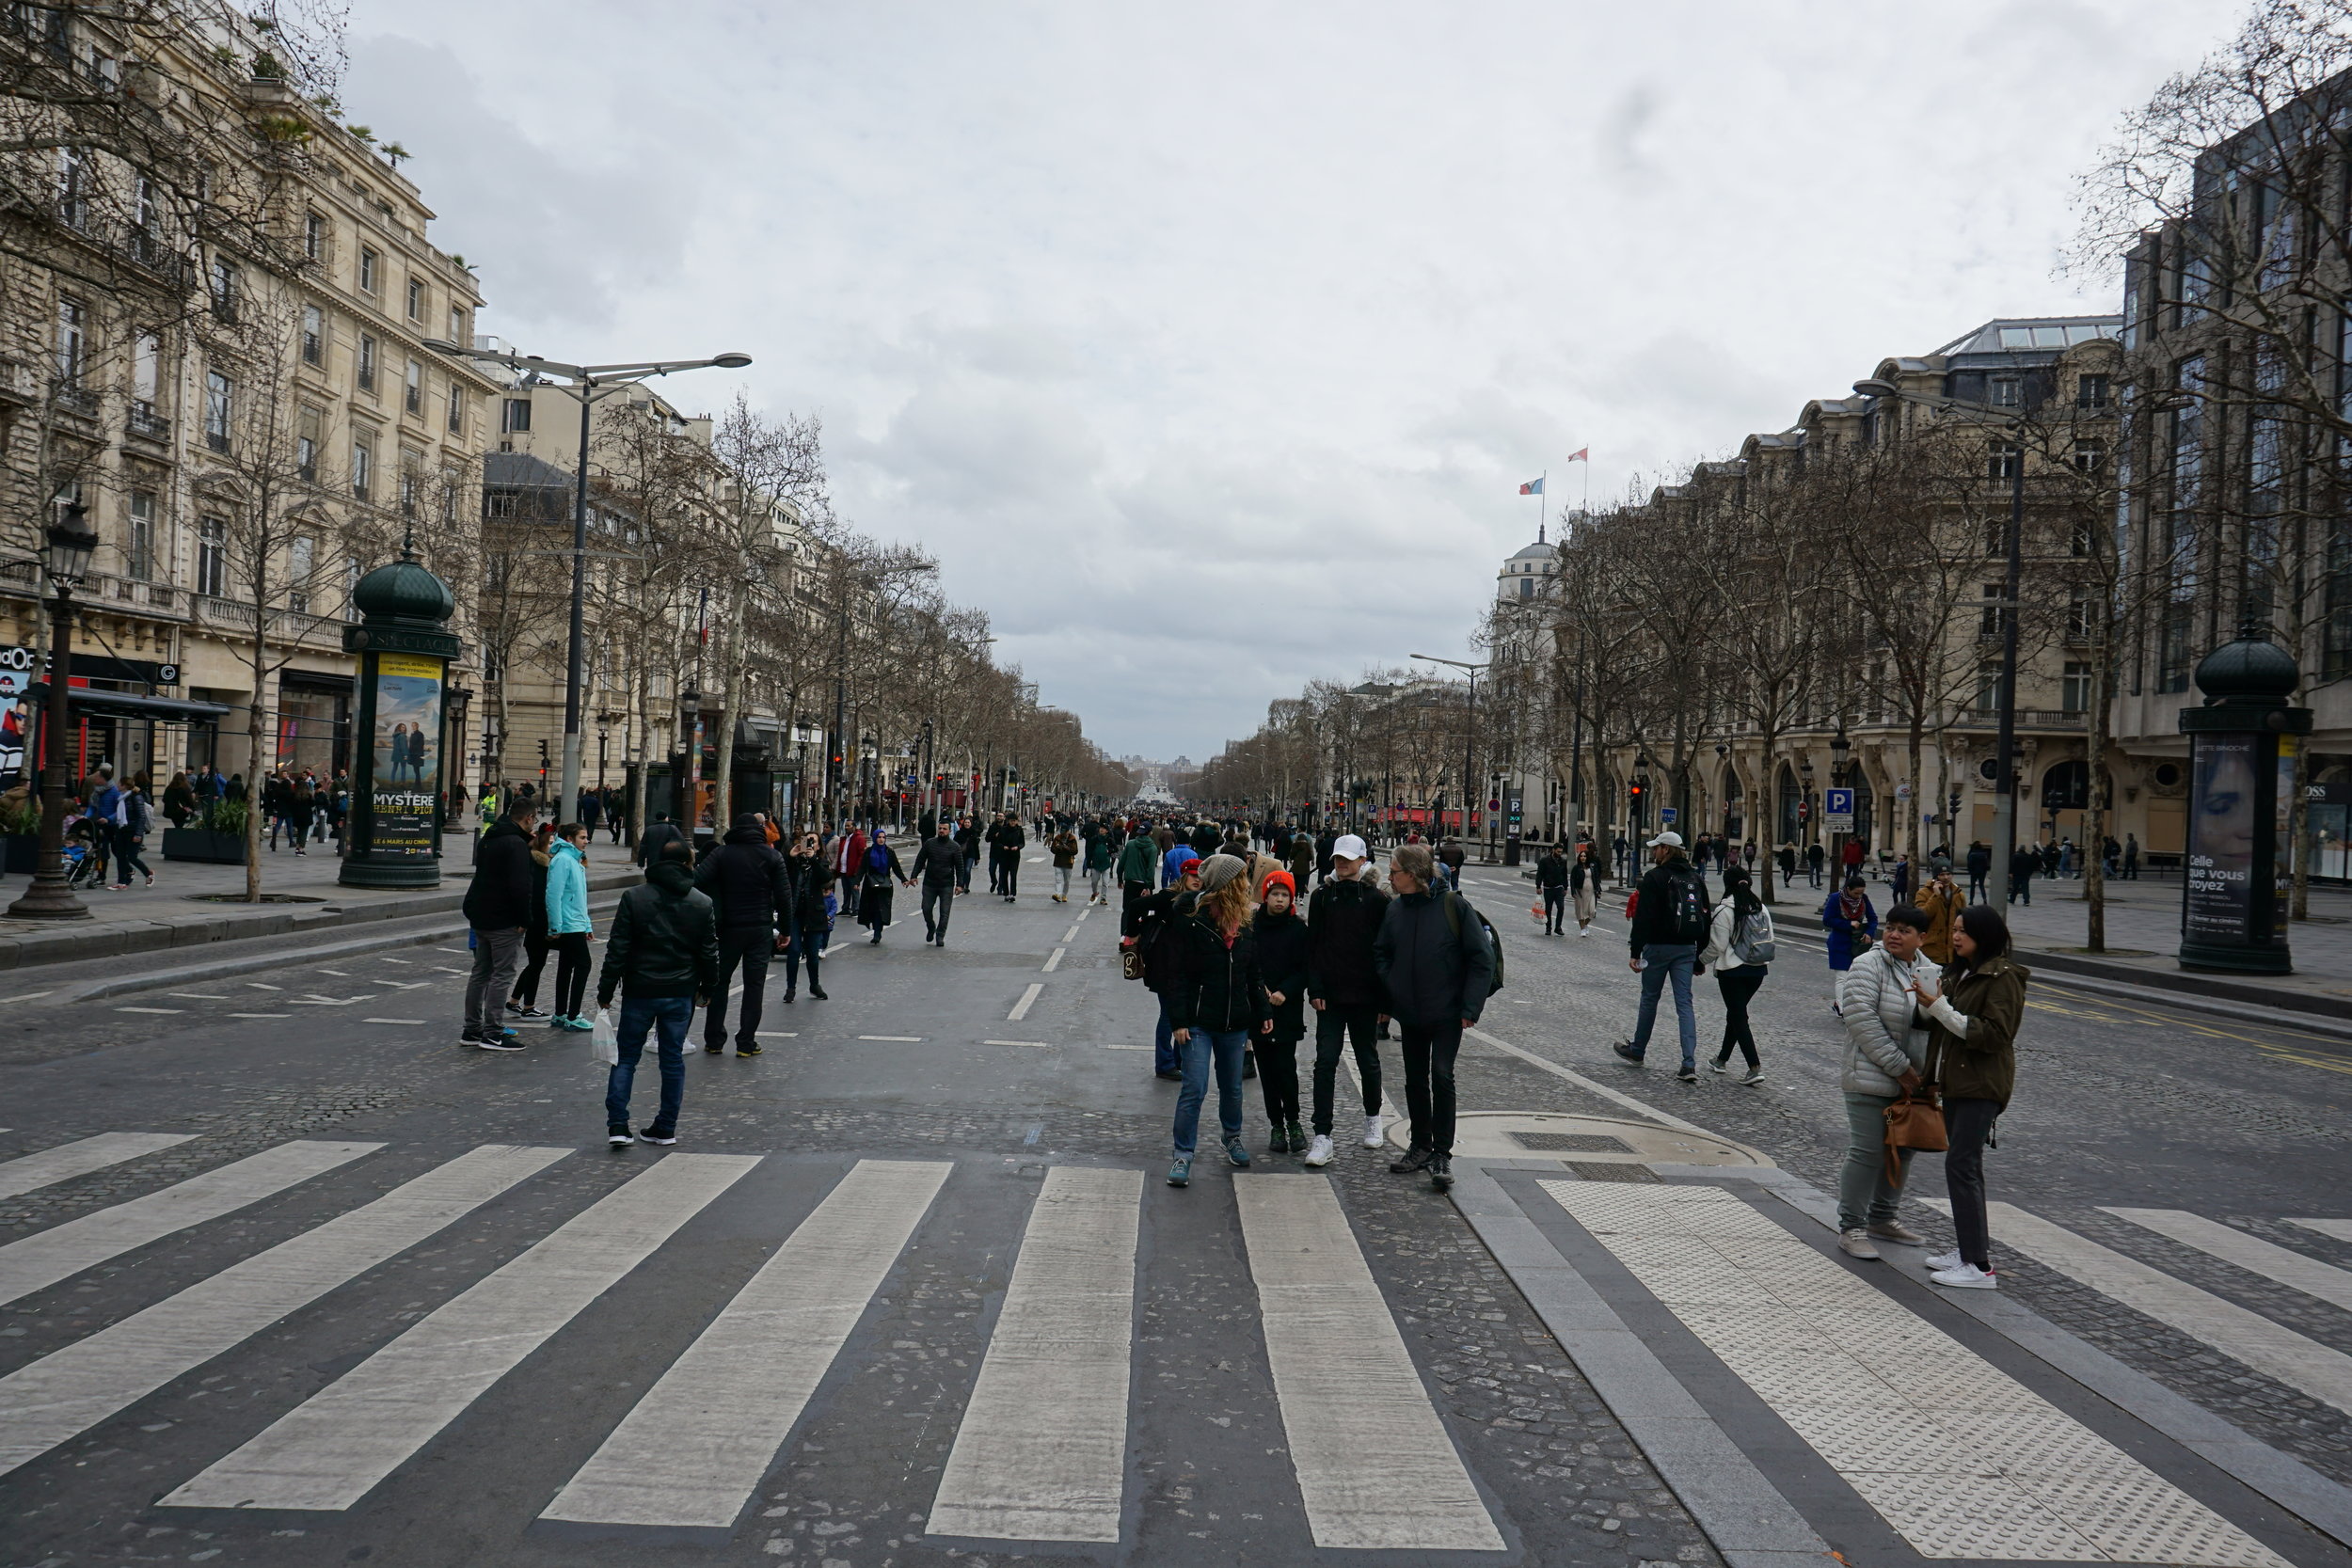  Champs Elysee as a pedestrian mall 